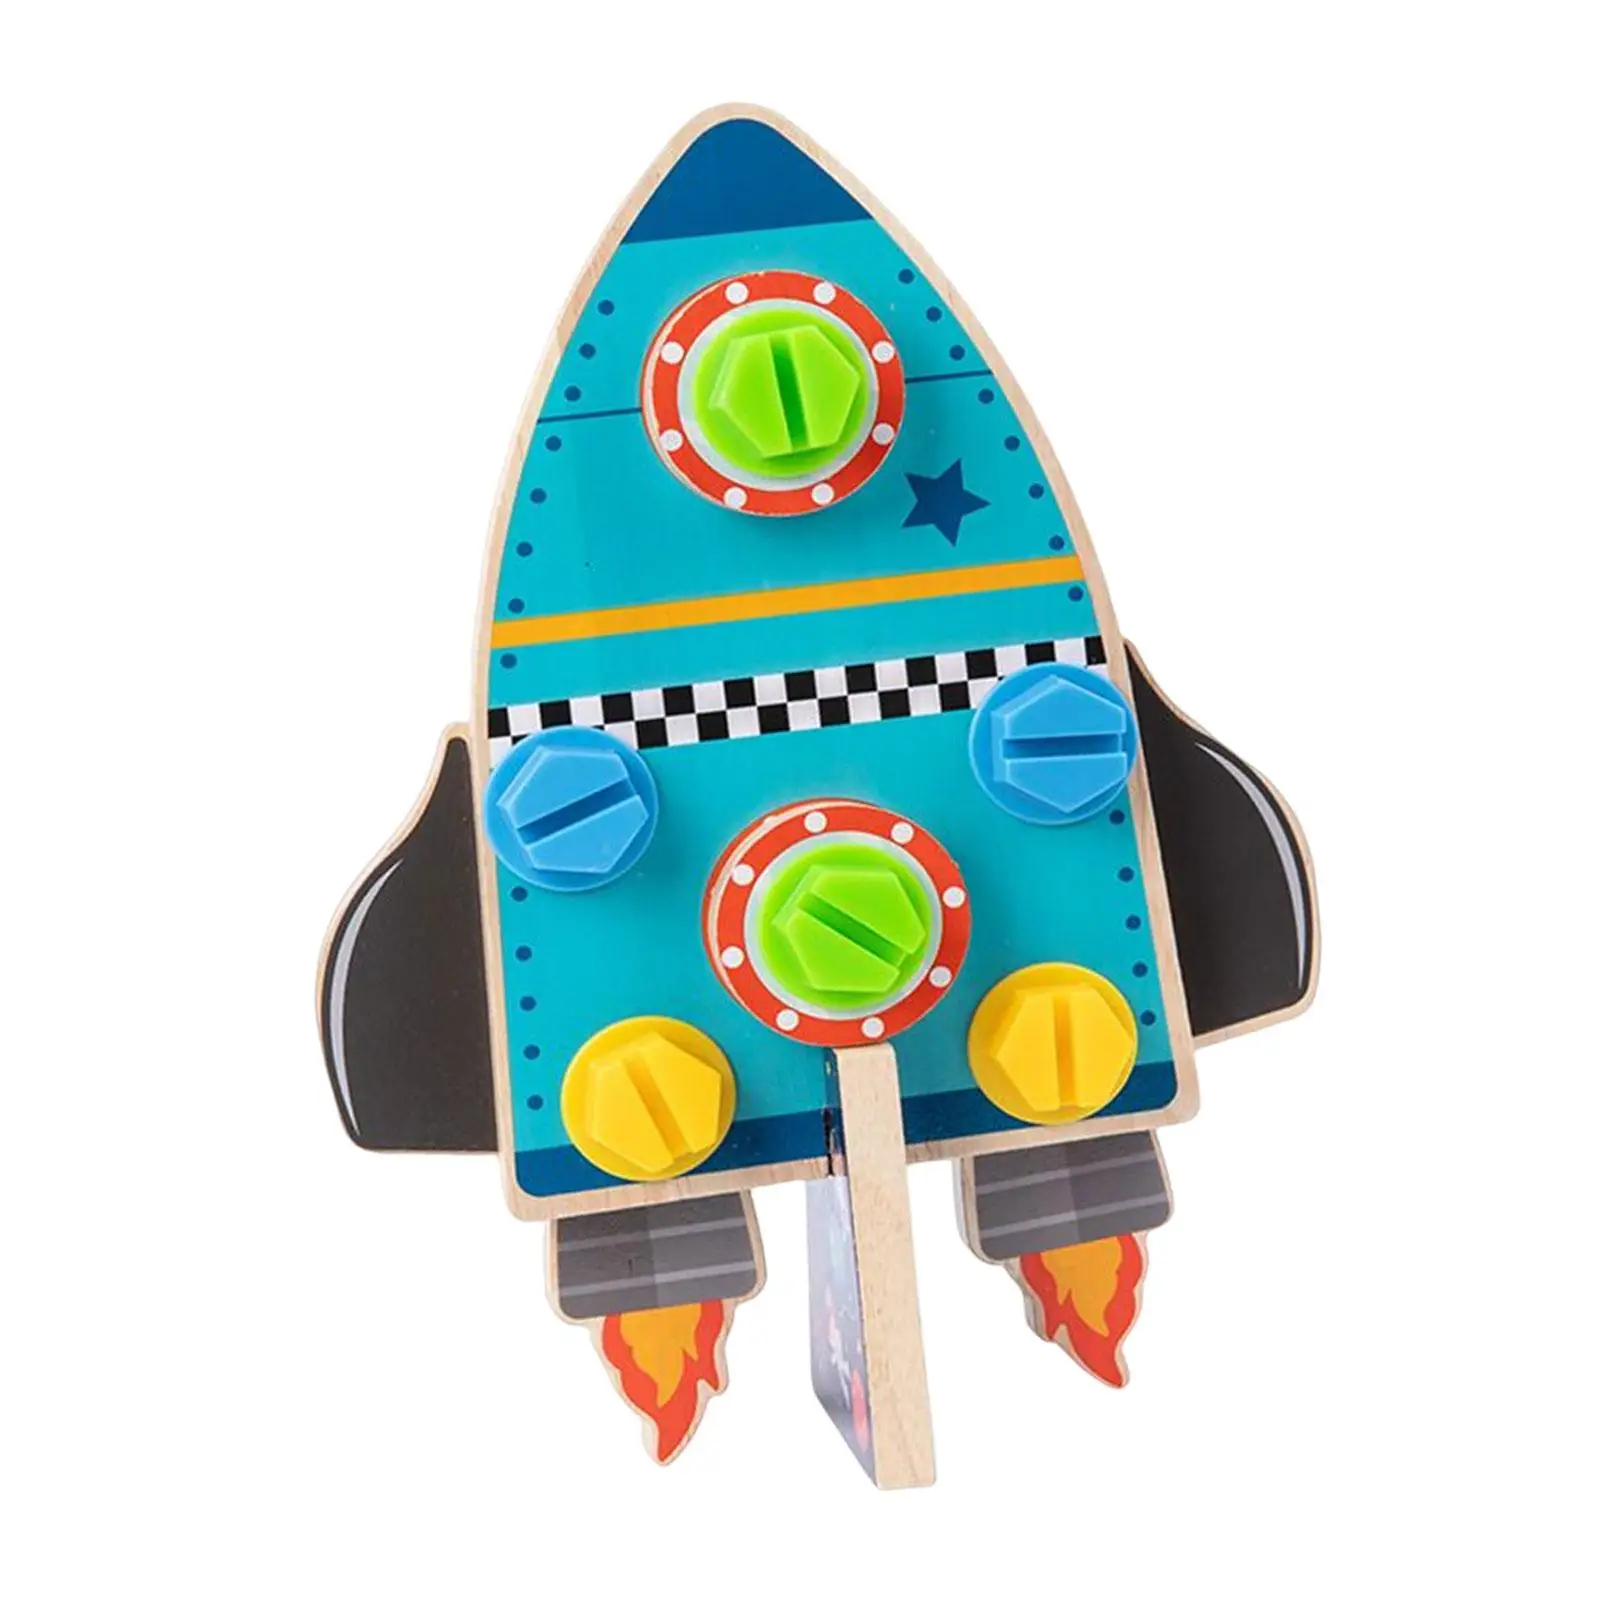 Rocket Shaped Screwdriver Board Set Develop Fine Motor Skills Educational Sensory Learning Toy for Children